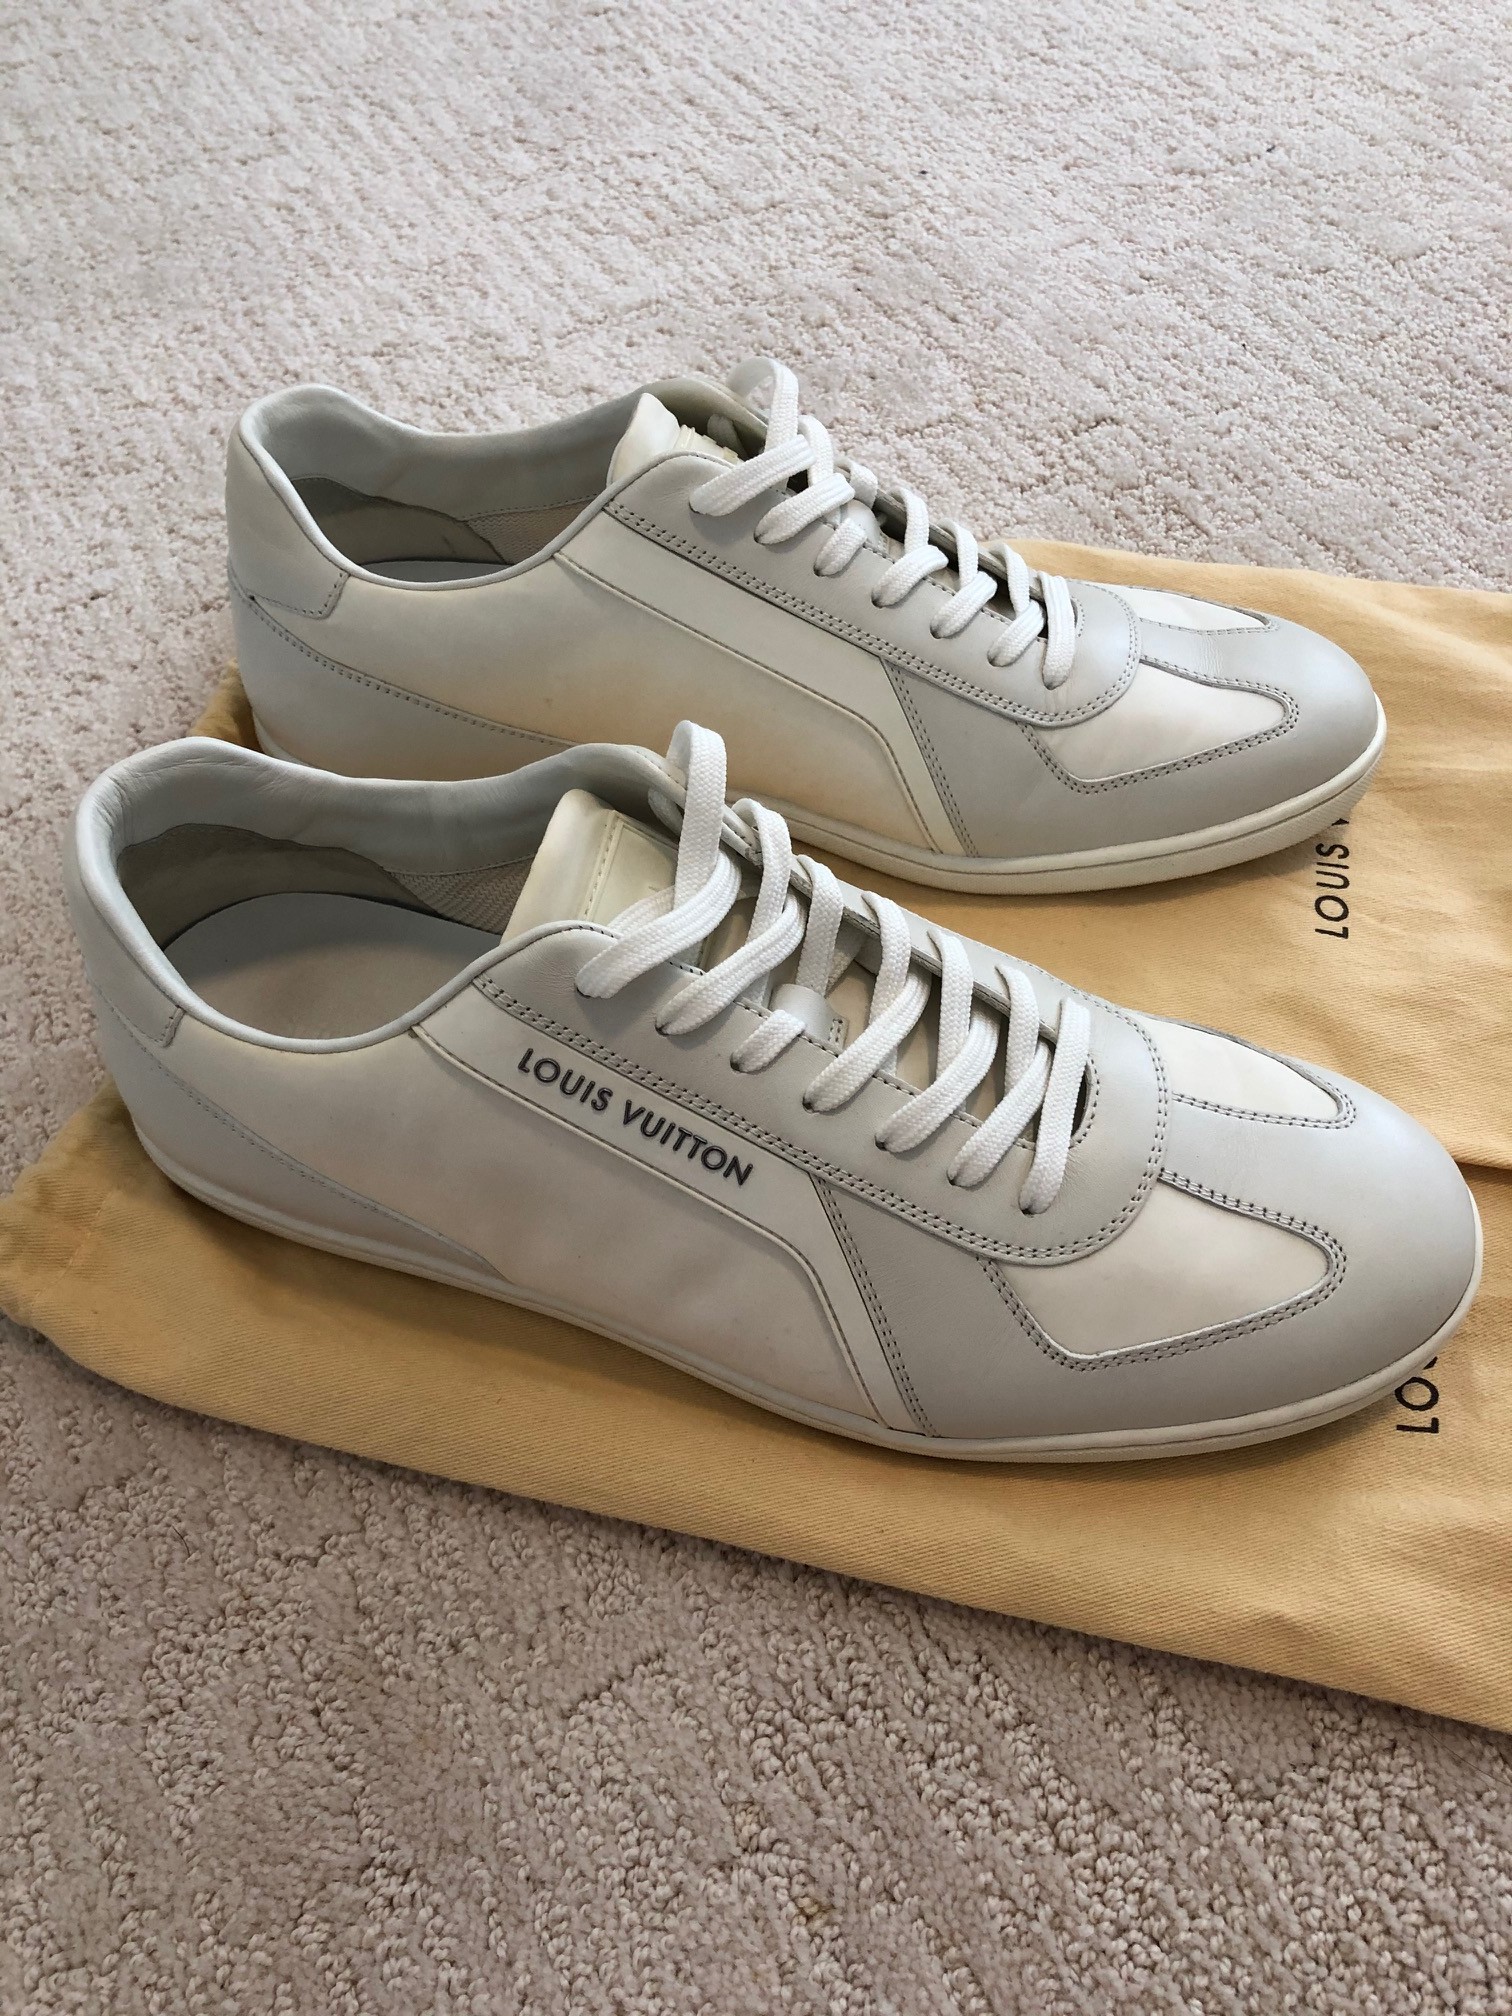 $800 Men's Louis Vuitton White Leather Sneaker Trainers SZ LV 7.5 / US 9.5  - Lust4Labels